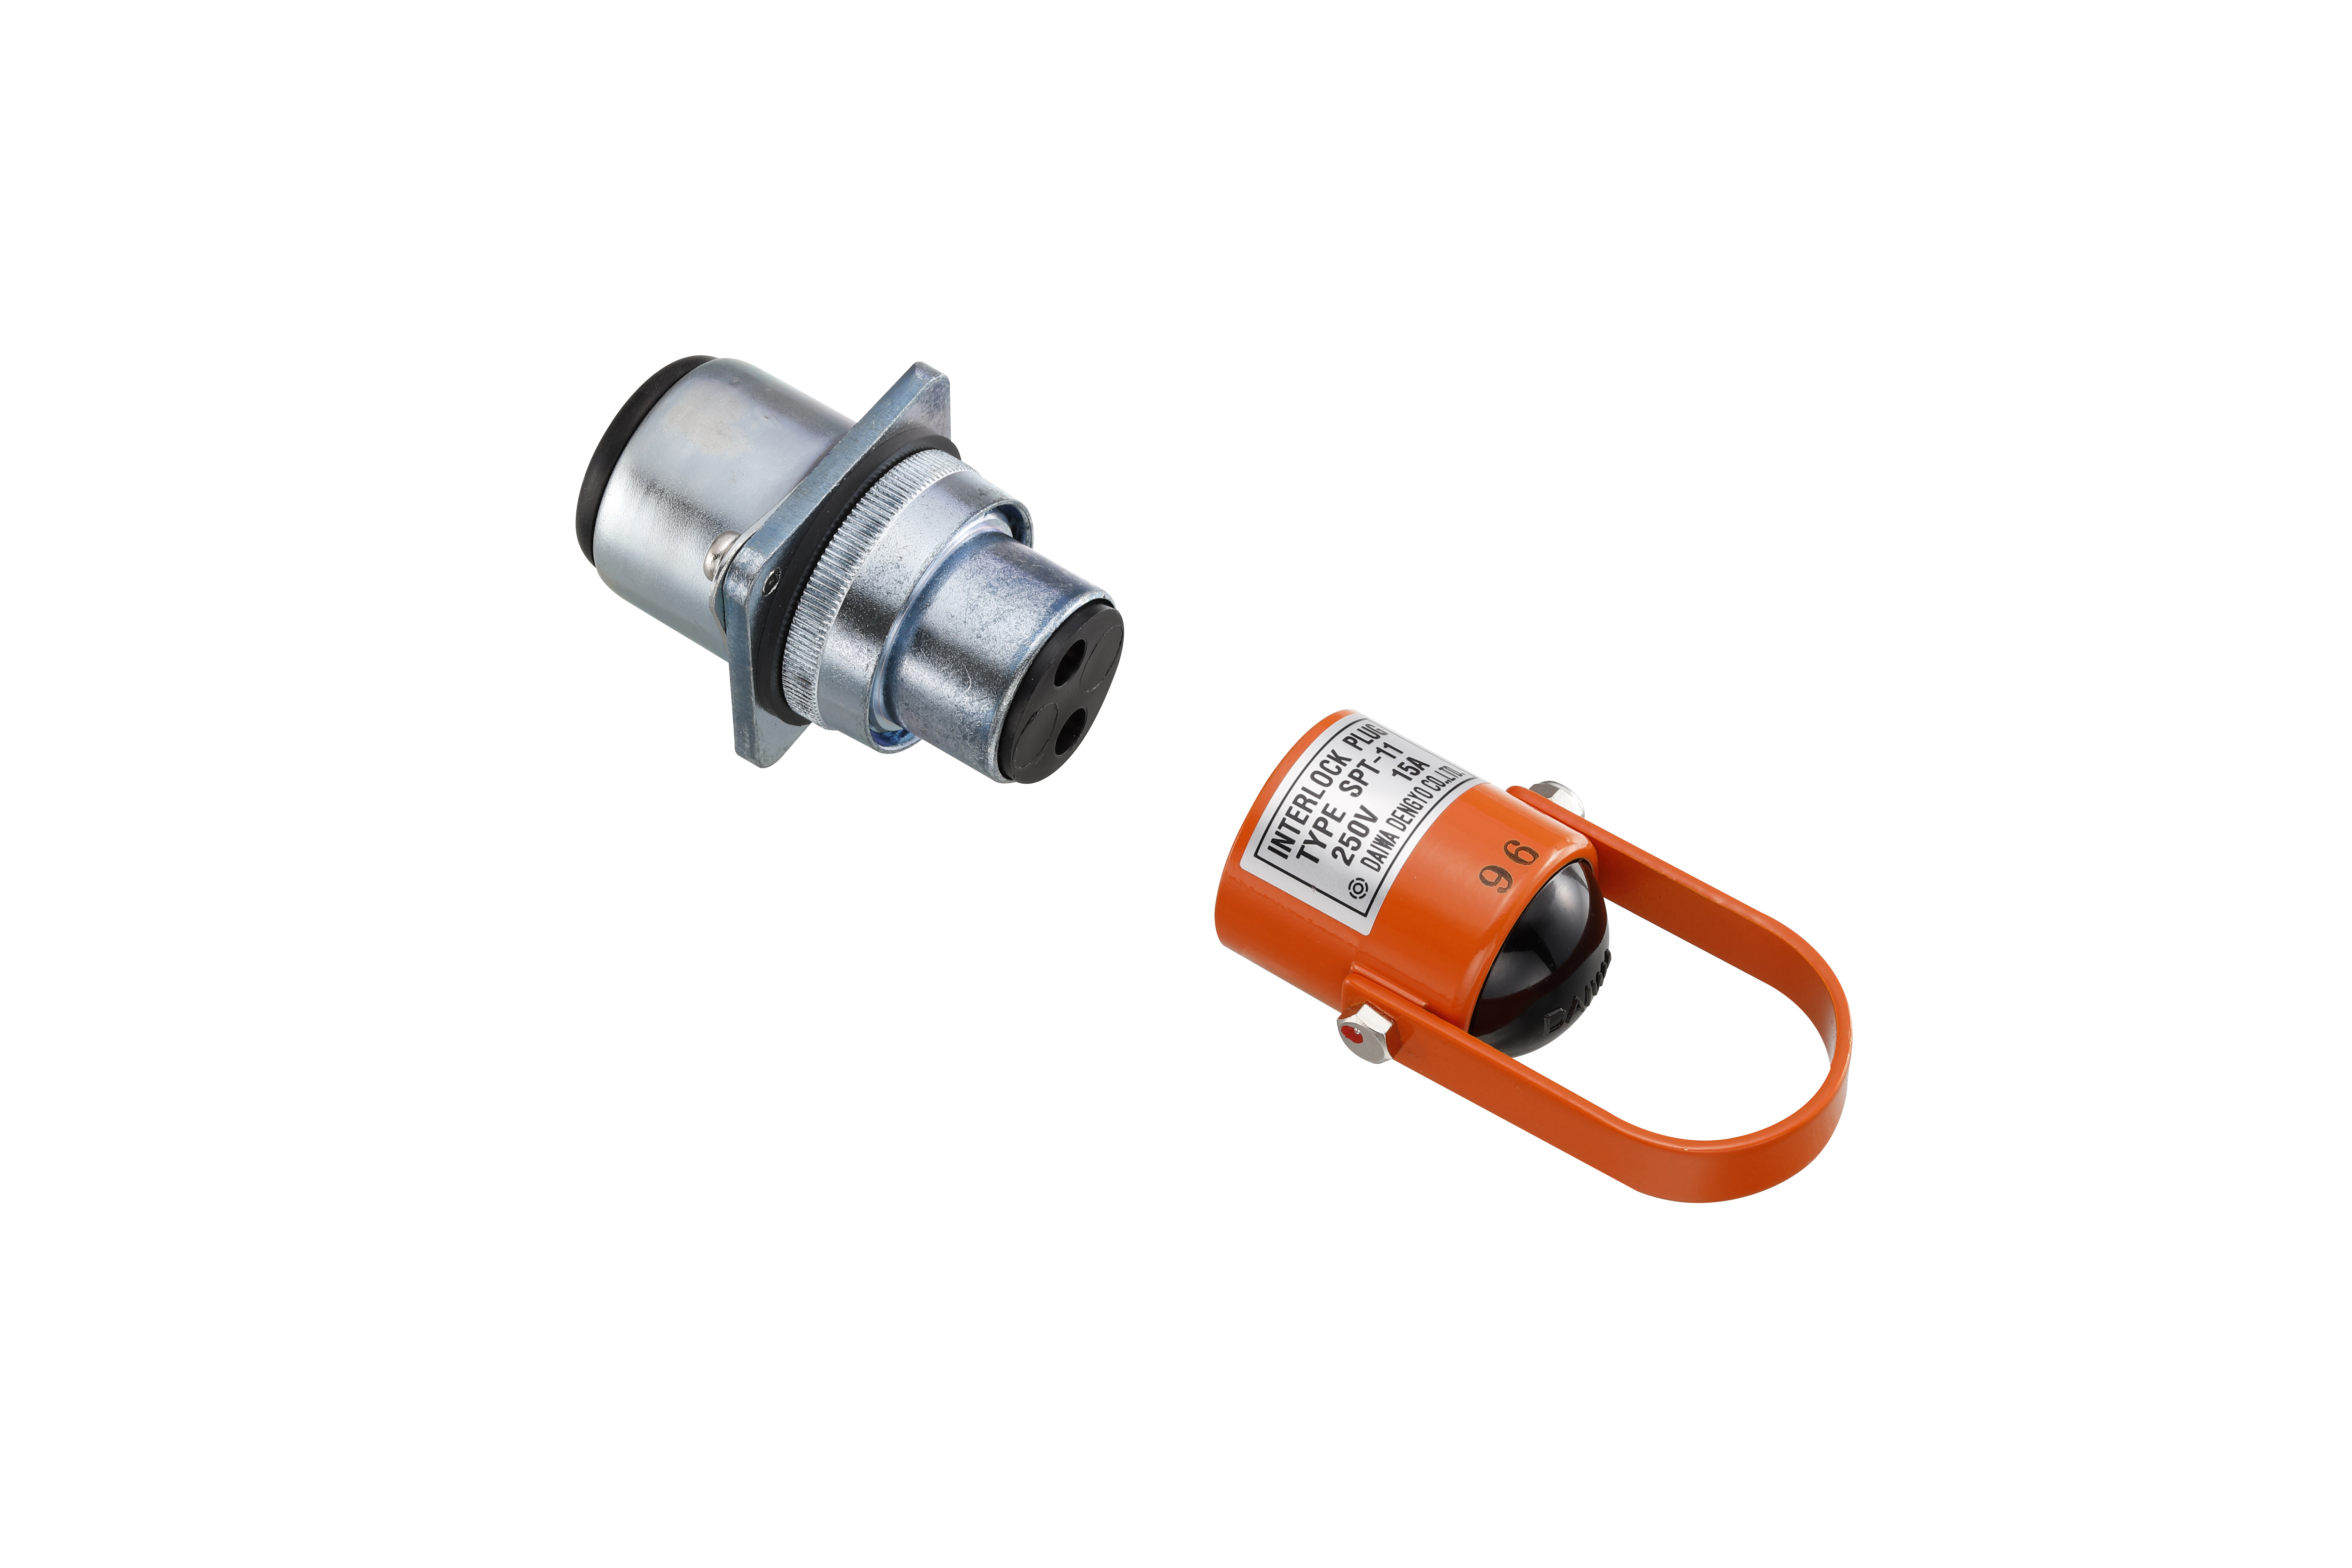 Interlock Plug (SPT-11-UL) 